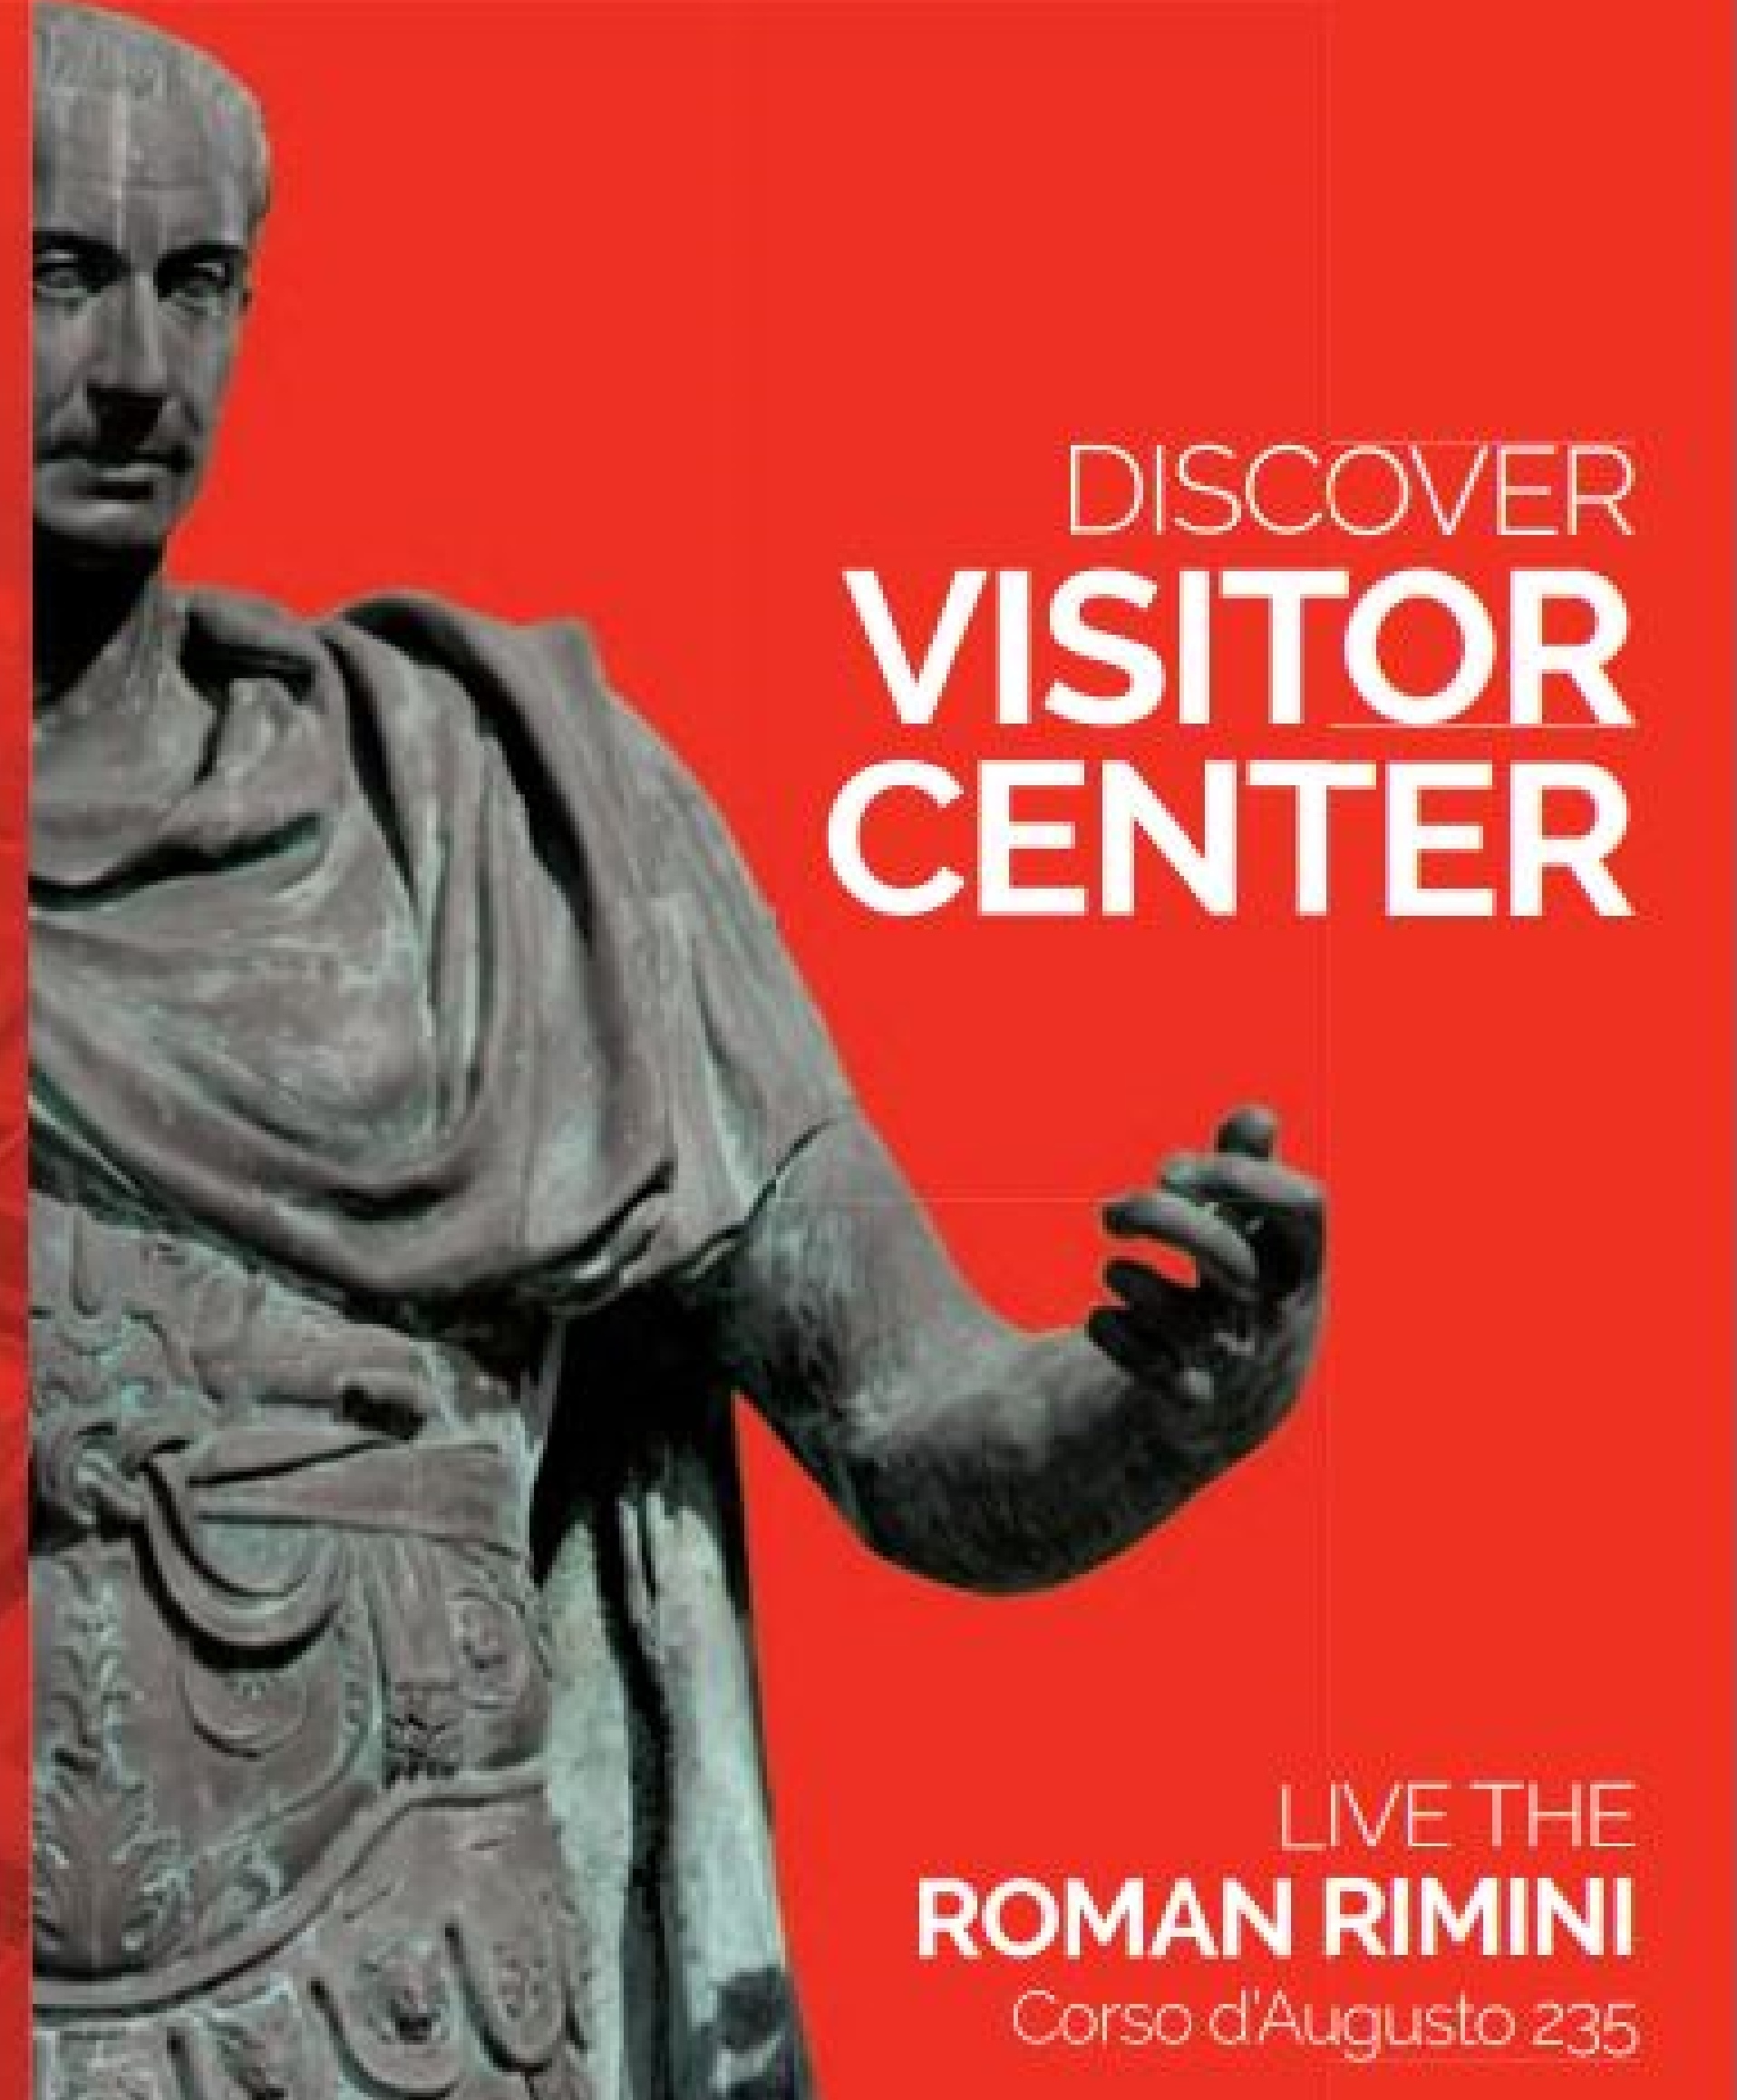 PDF: Discover Visitor Center IT,EN 1.10M